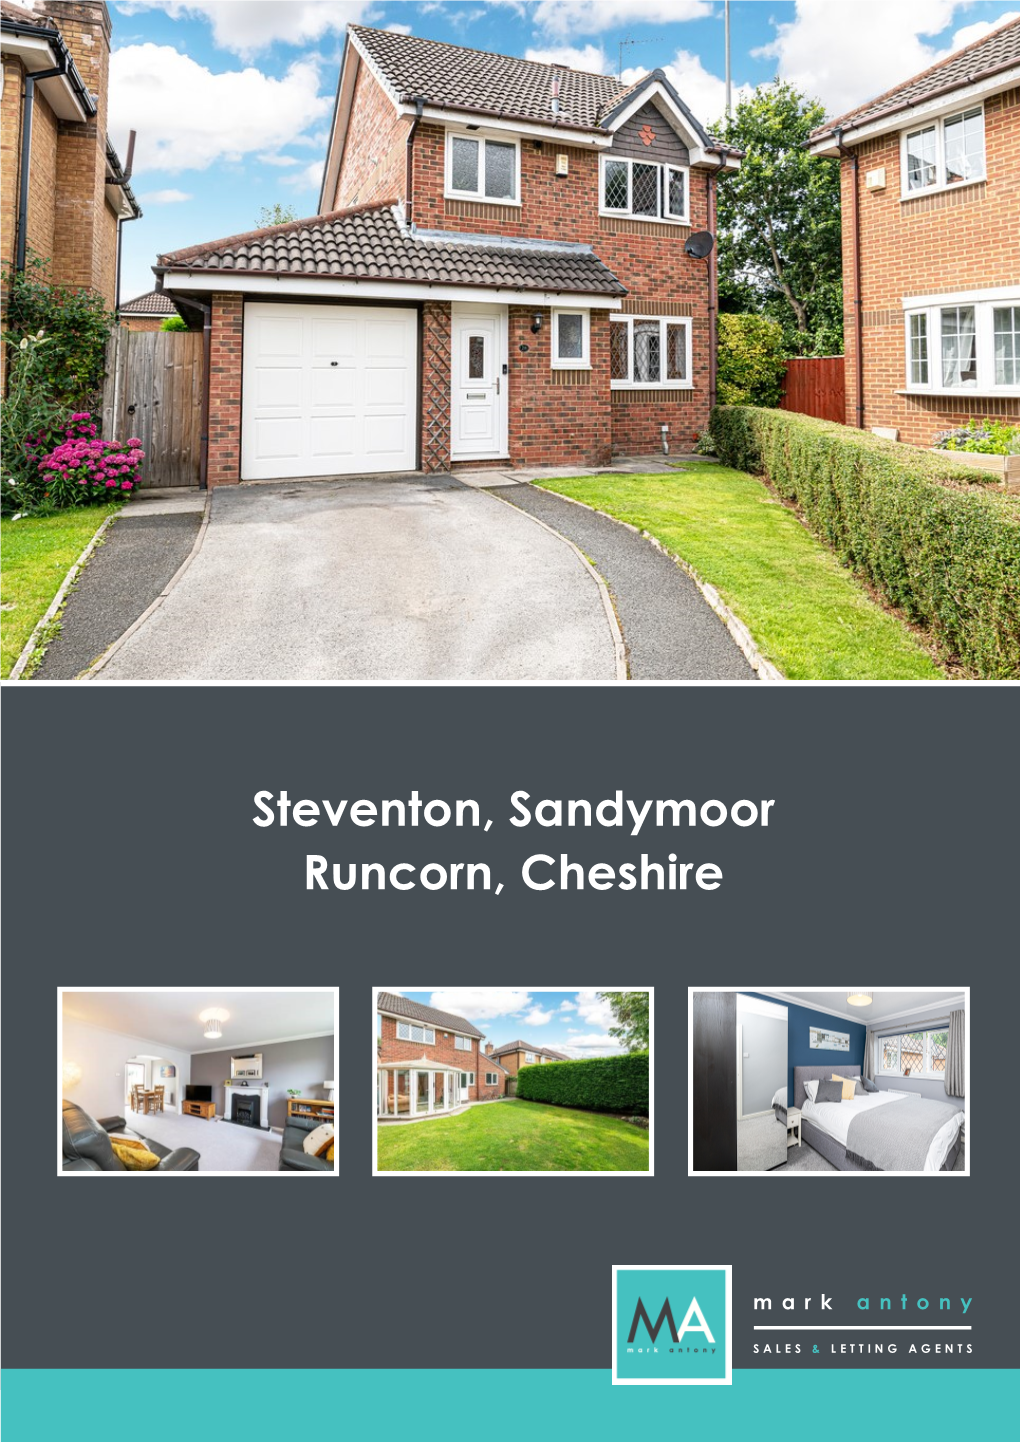 Steventon, Sandymoor Runcorn, Cheshire